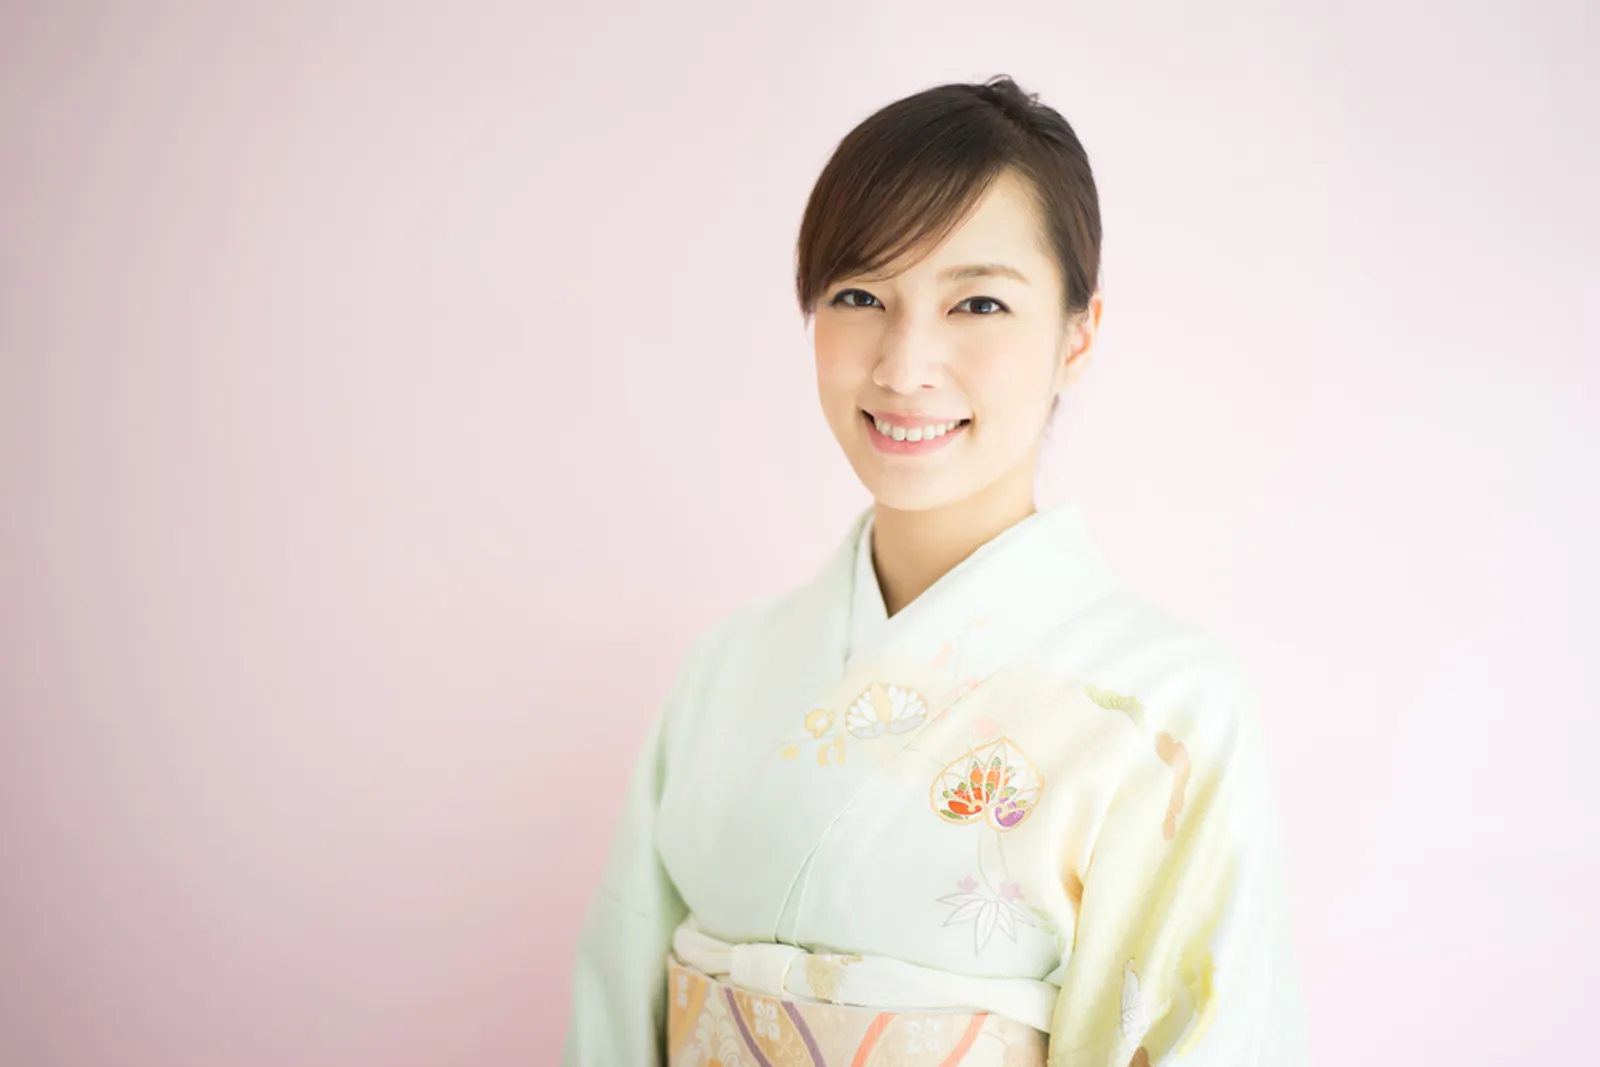 Apa Jadinya Jika Kimono Menjadi Wedding Dress yang Super Chic? Simak Yuk!